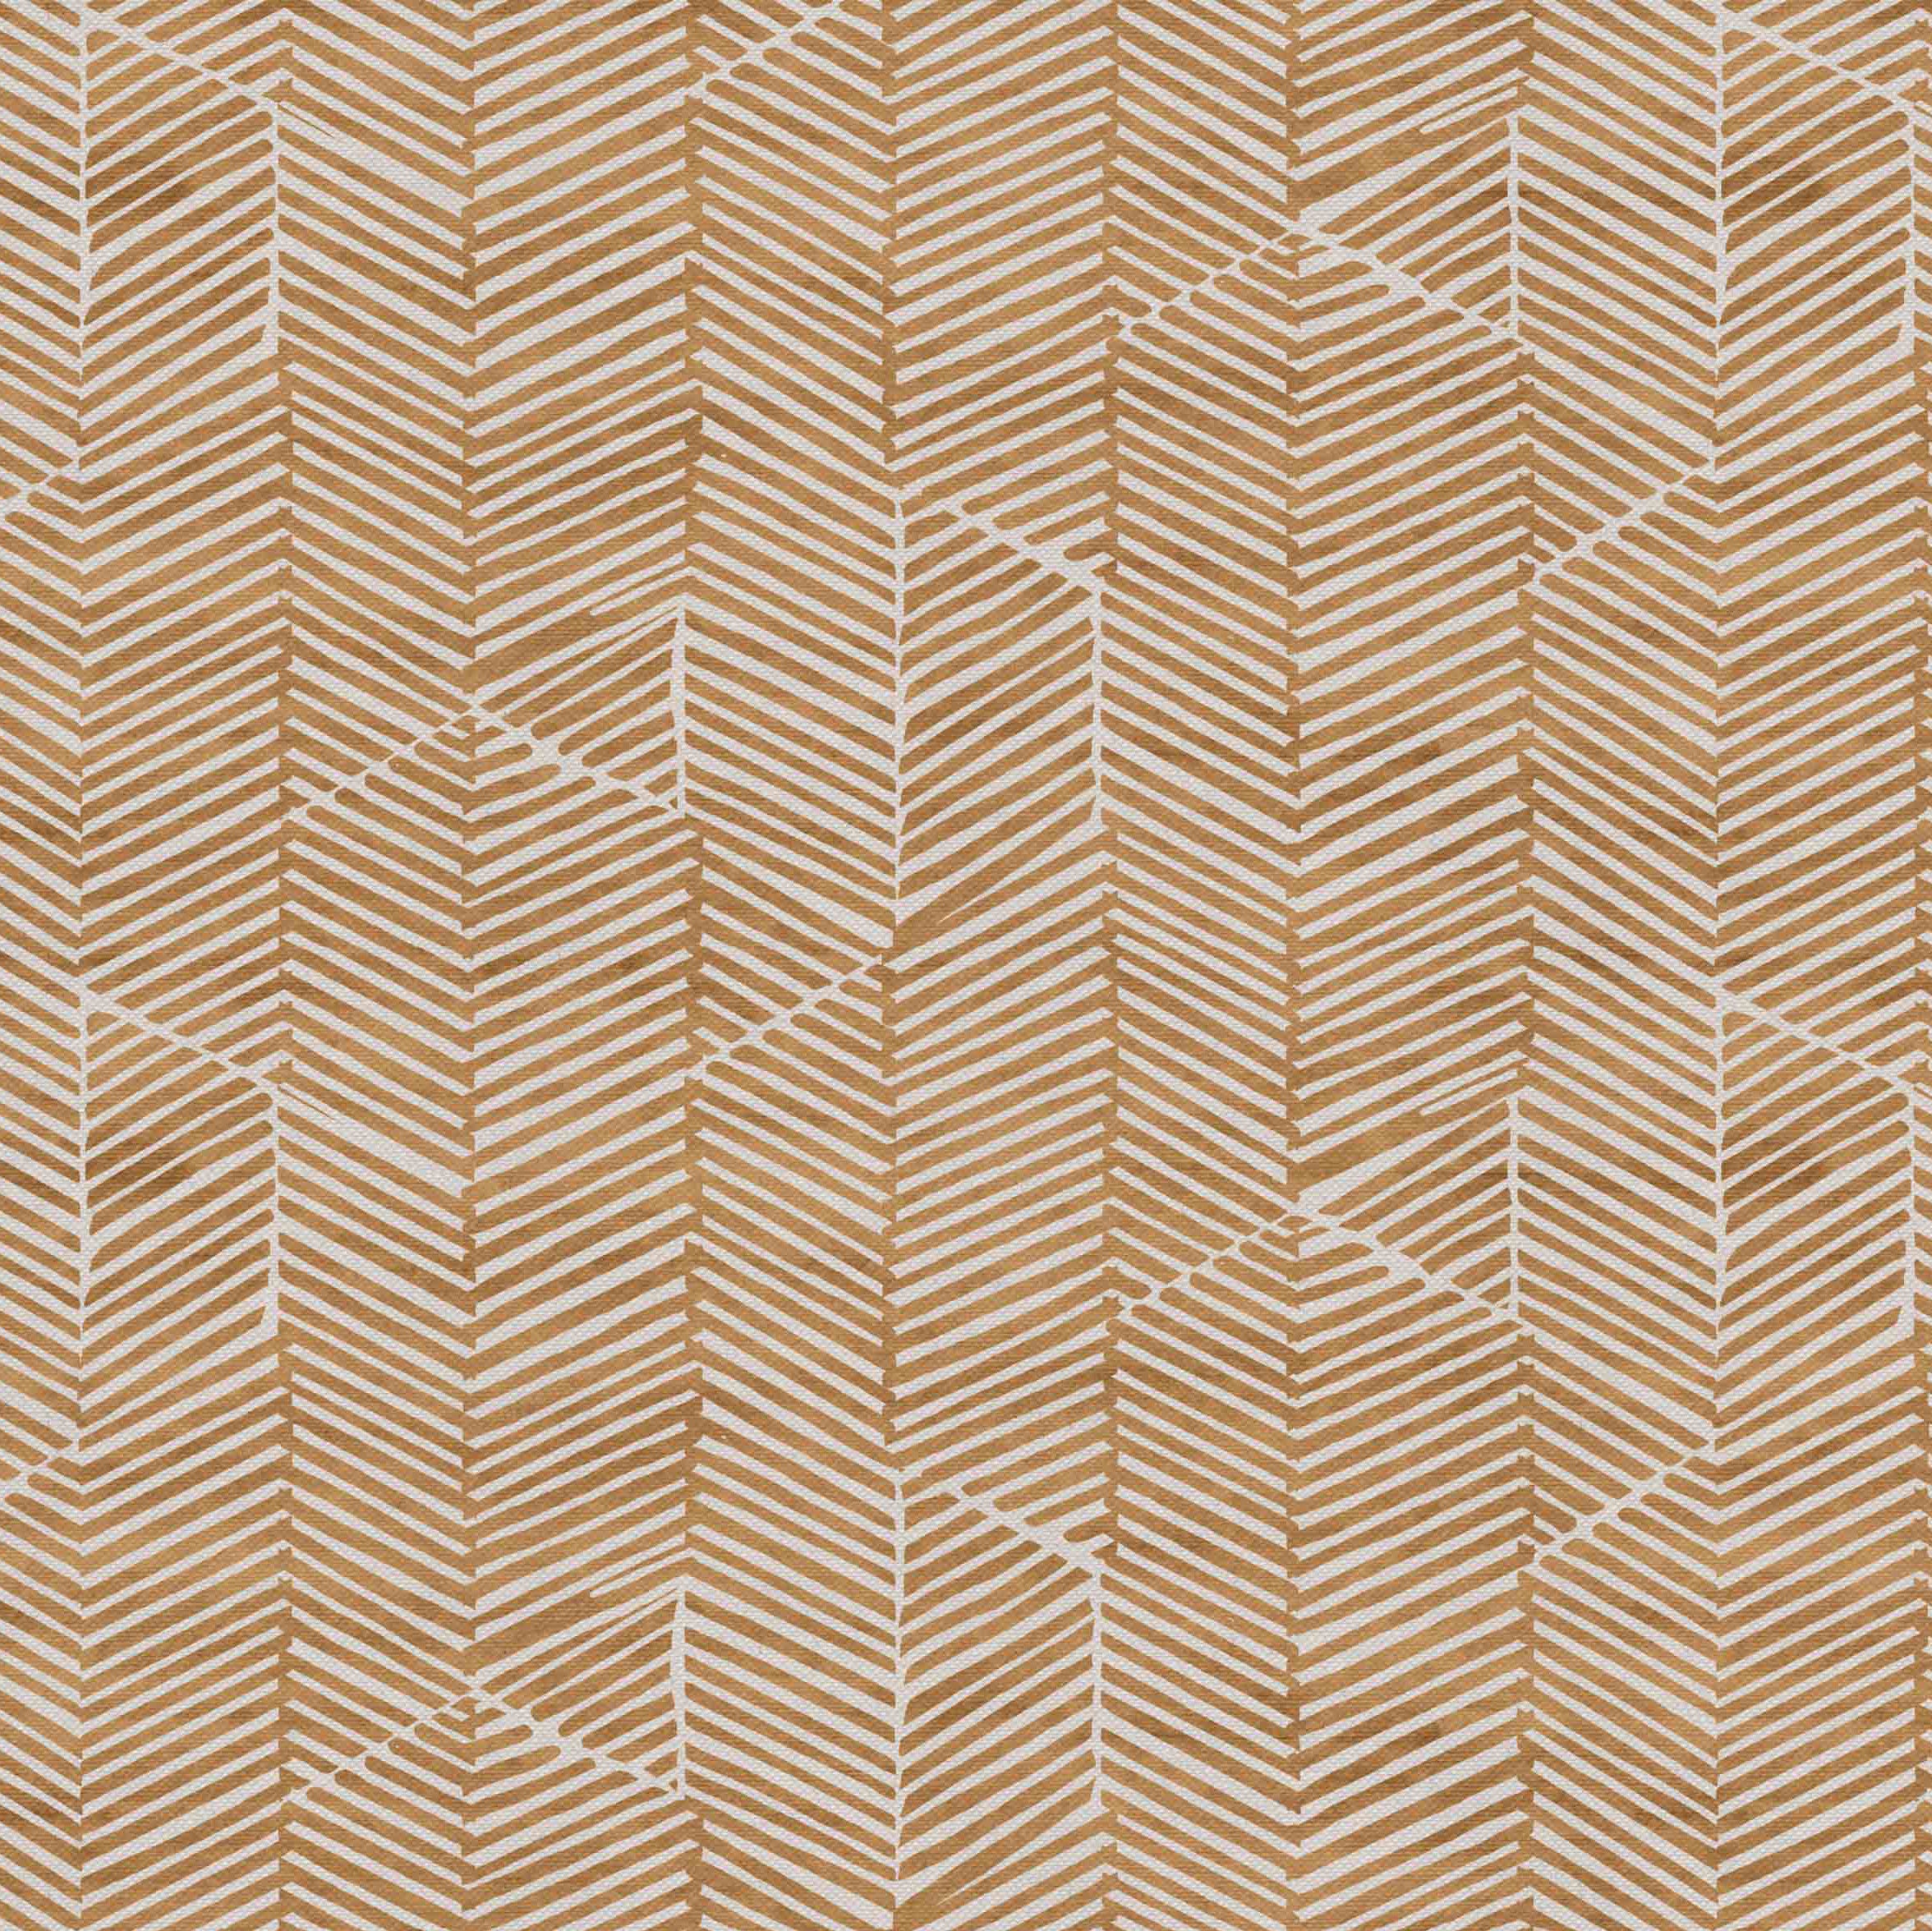 Detail of fabric in a dense herringbone print in sienna on a tan field.